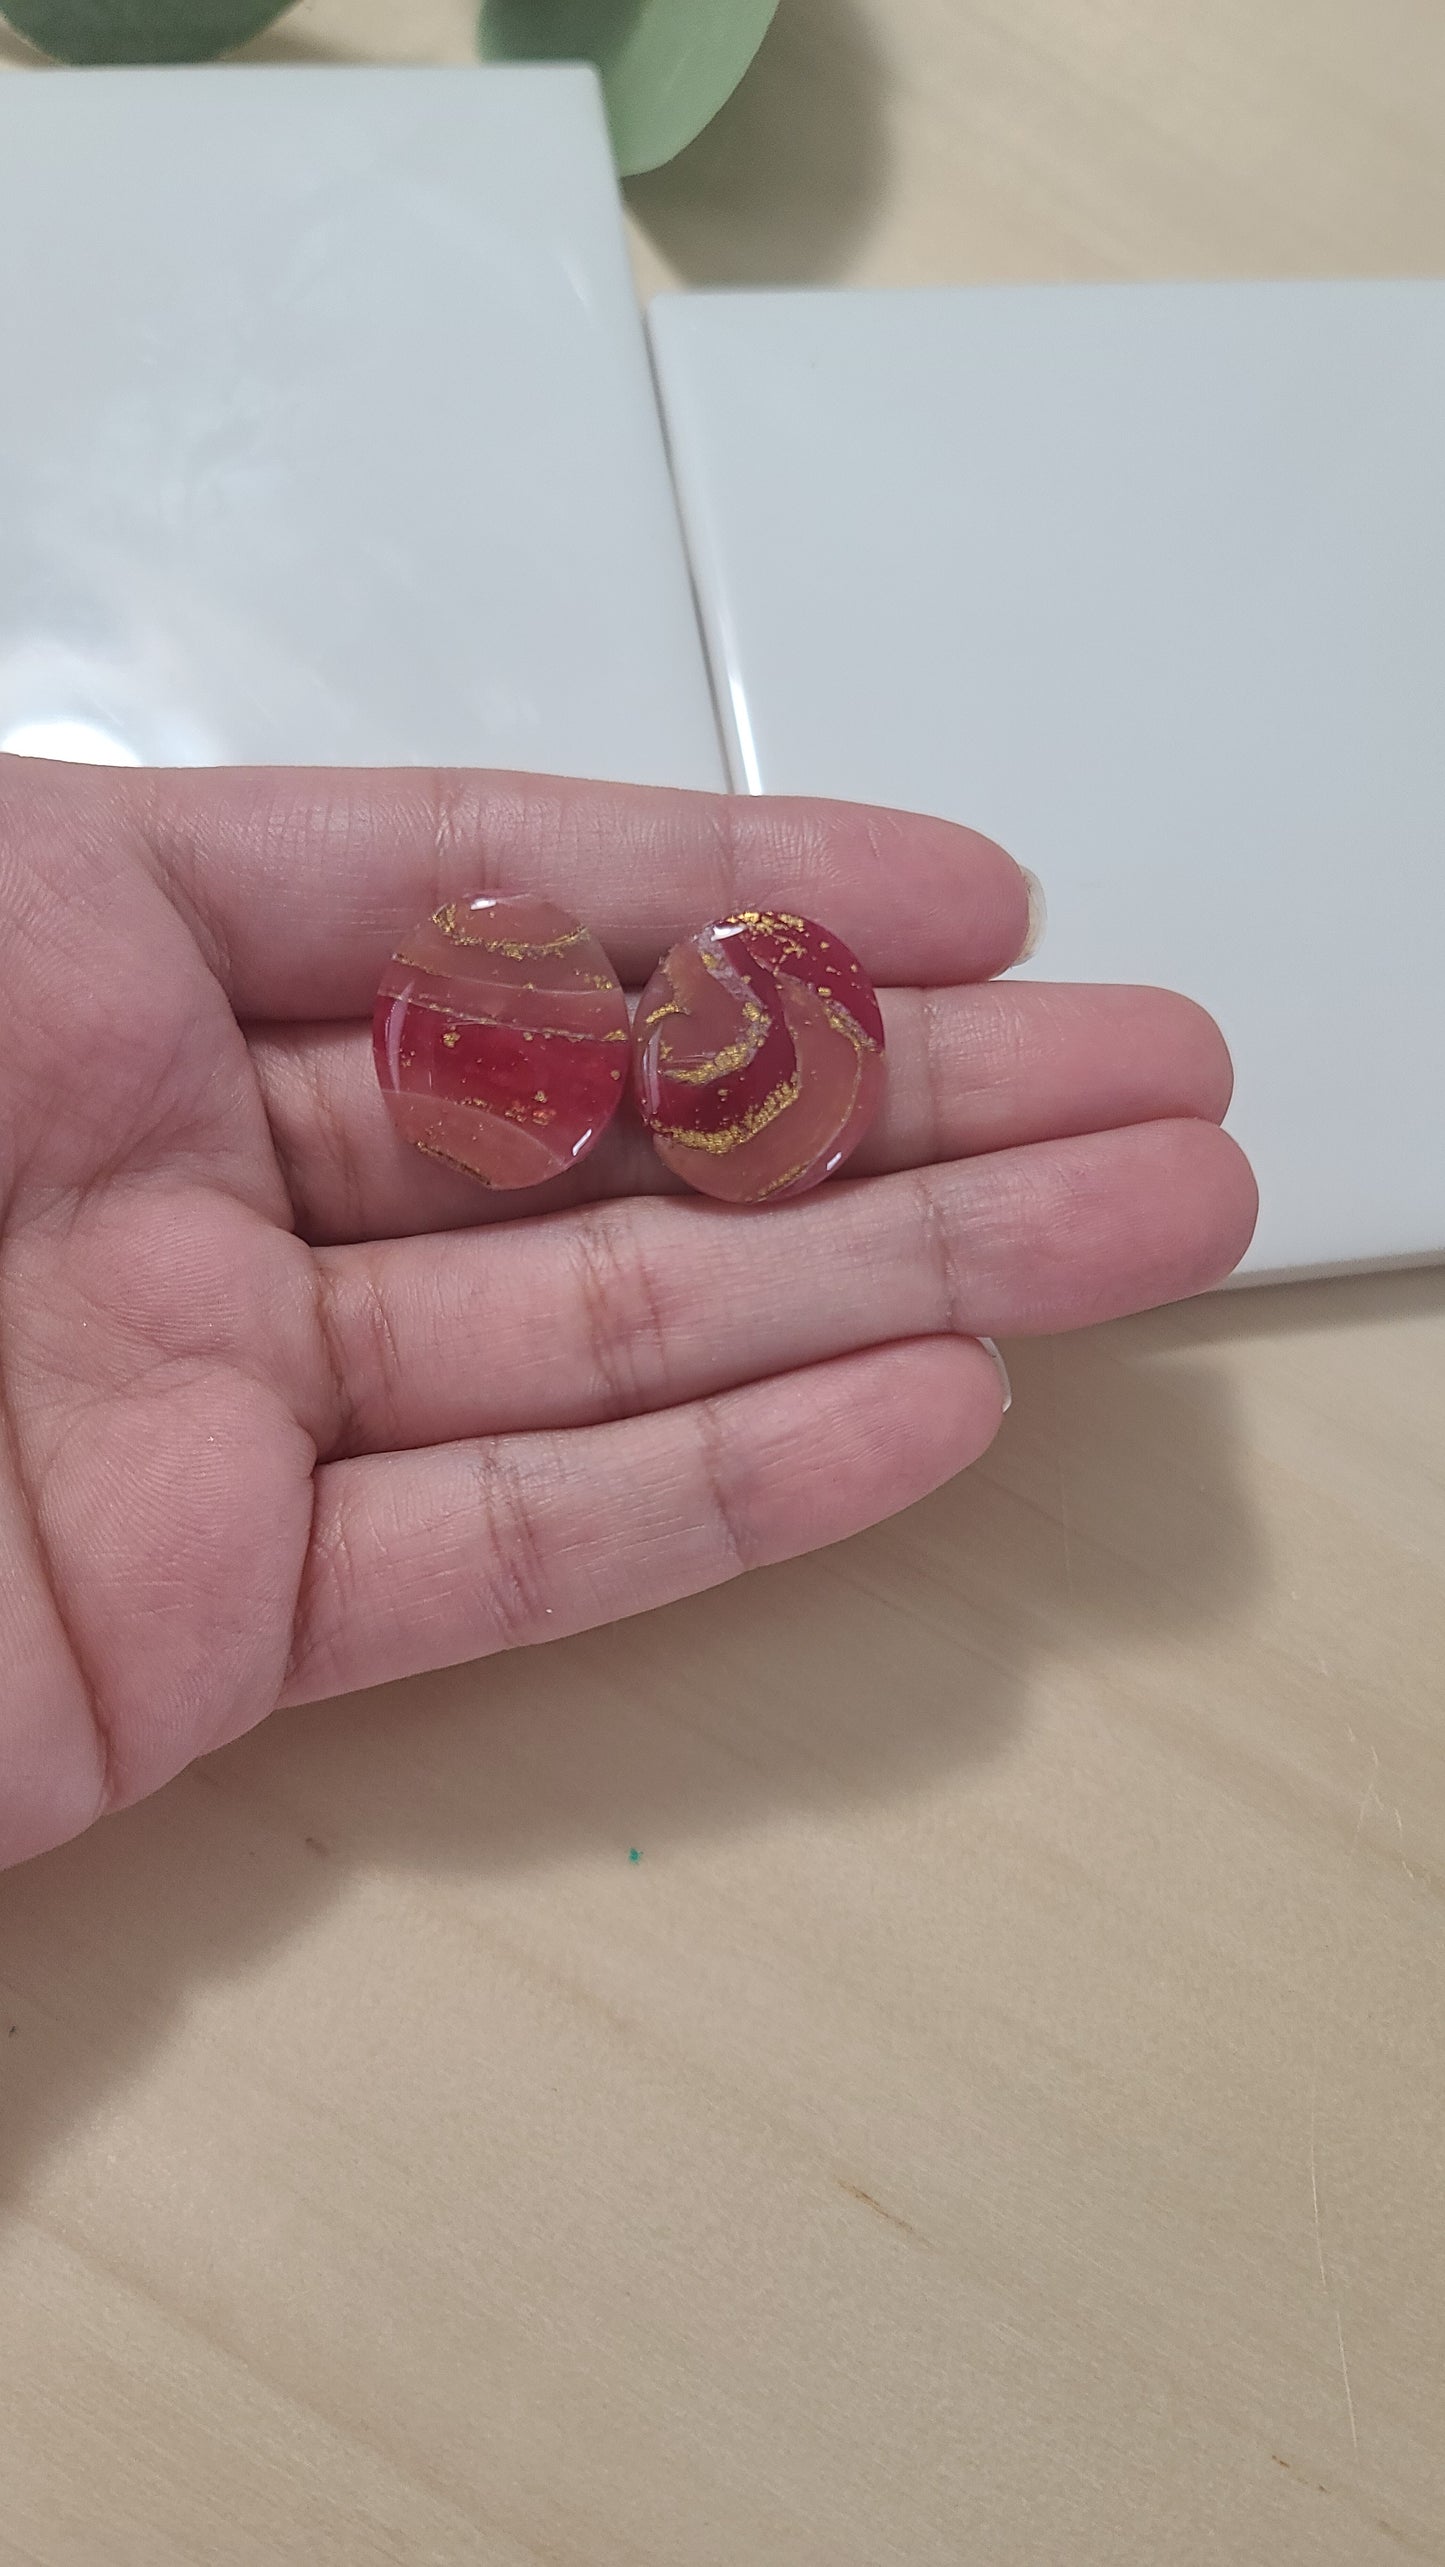 Red faux agate/marble stud earrings